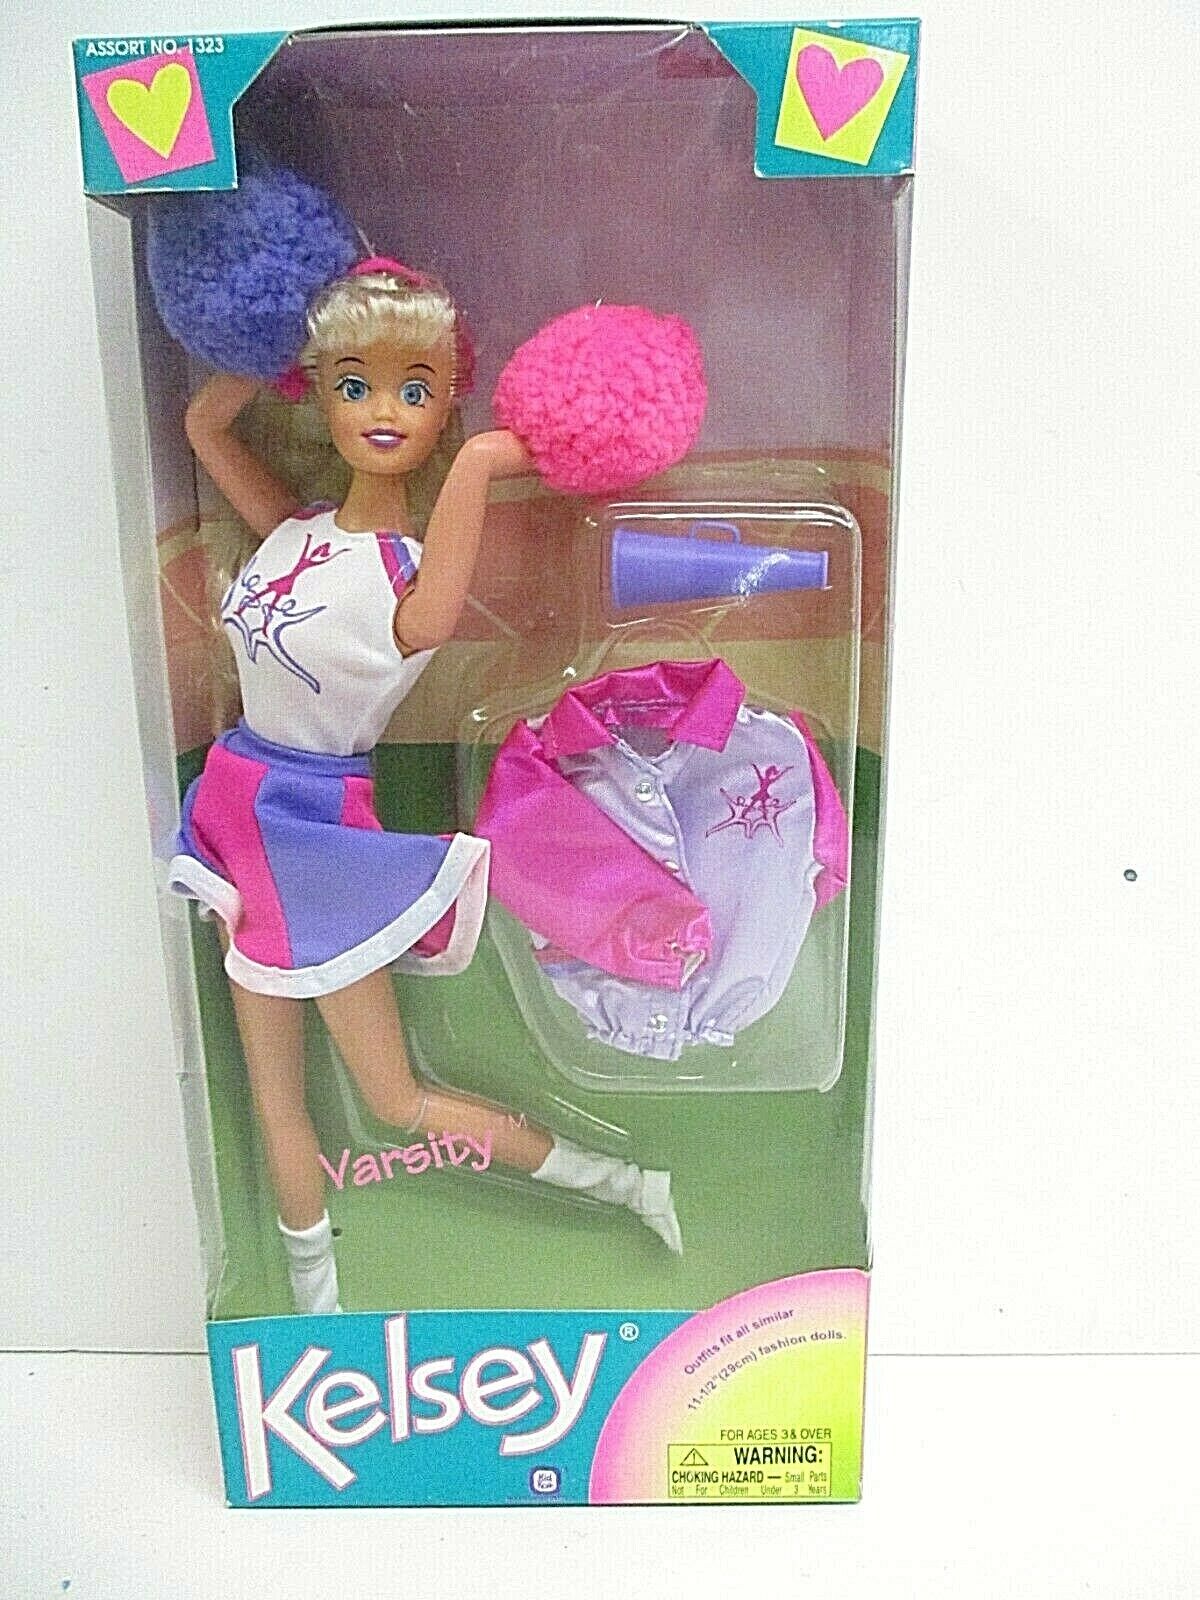 Kelsey Varsity Cheerleader Doll W/ Pom Pom And Jacket. 11.5"